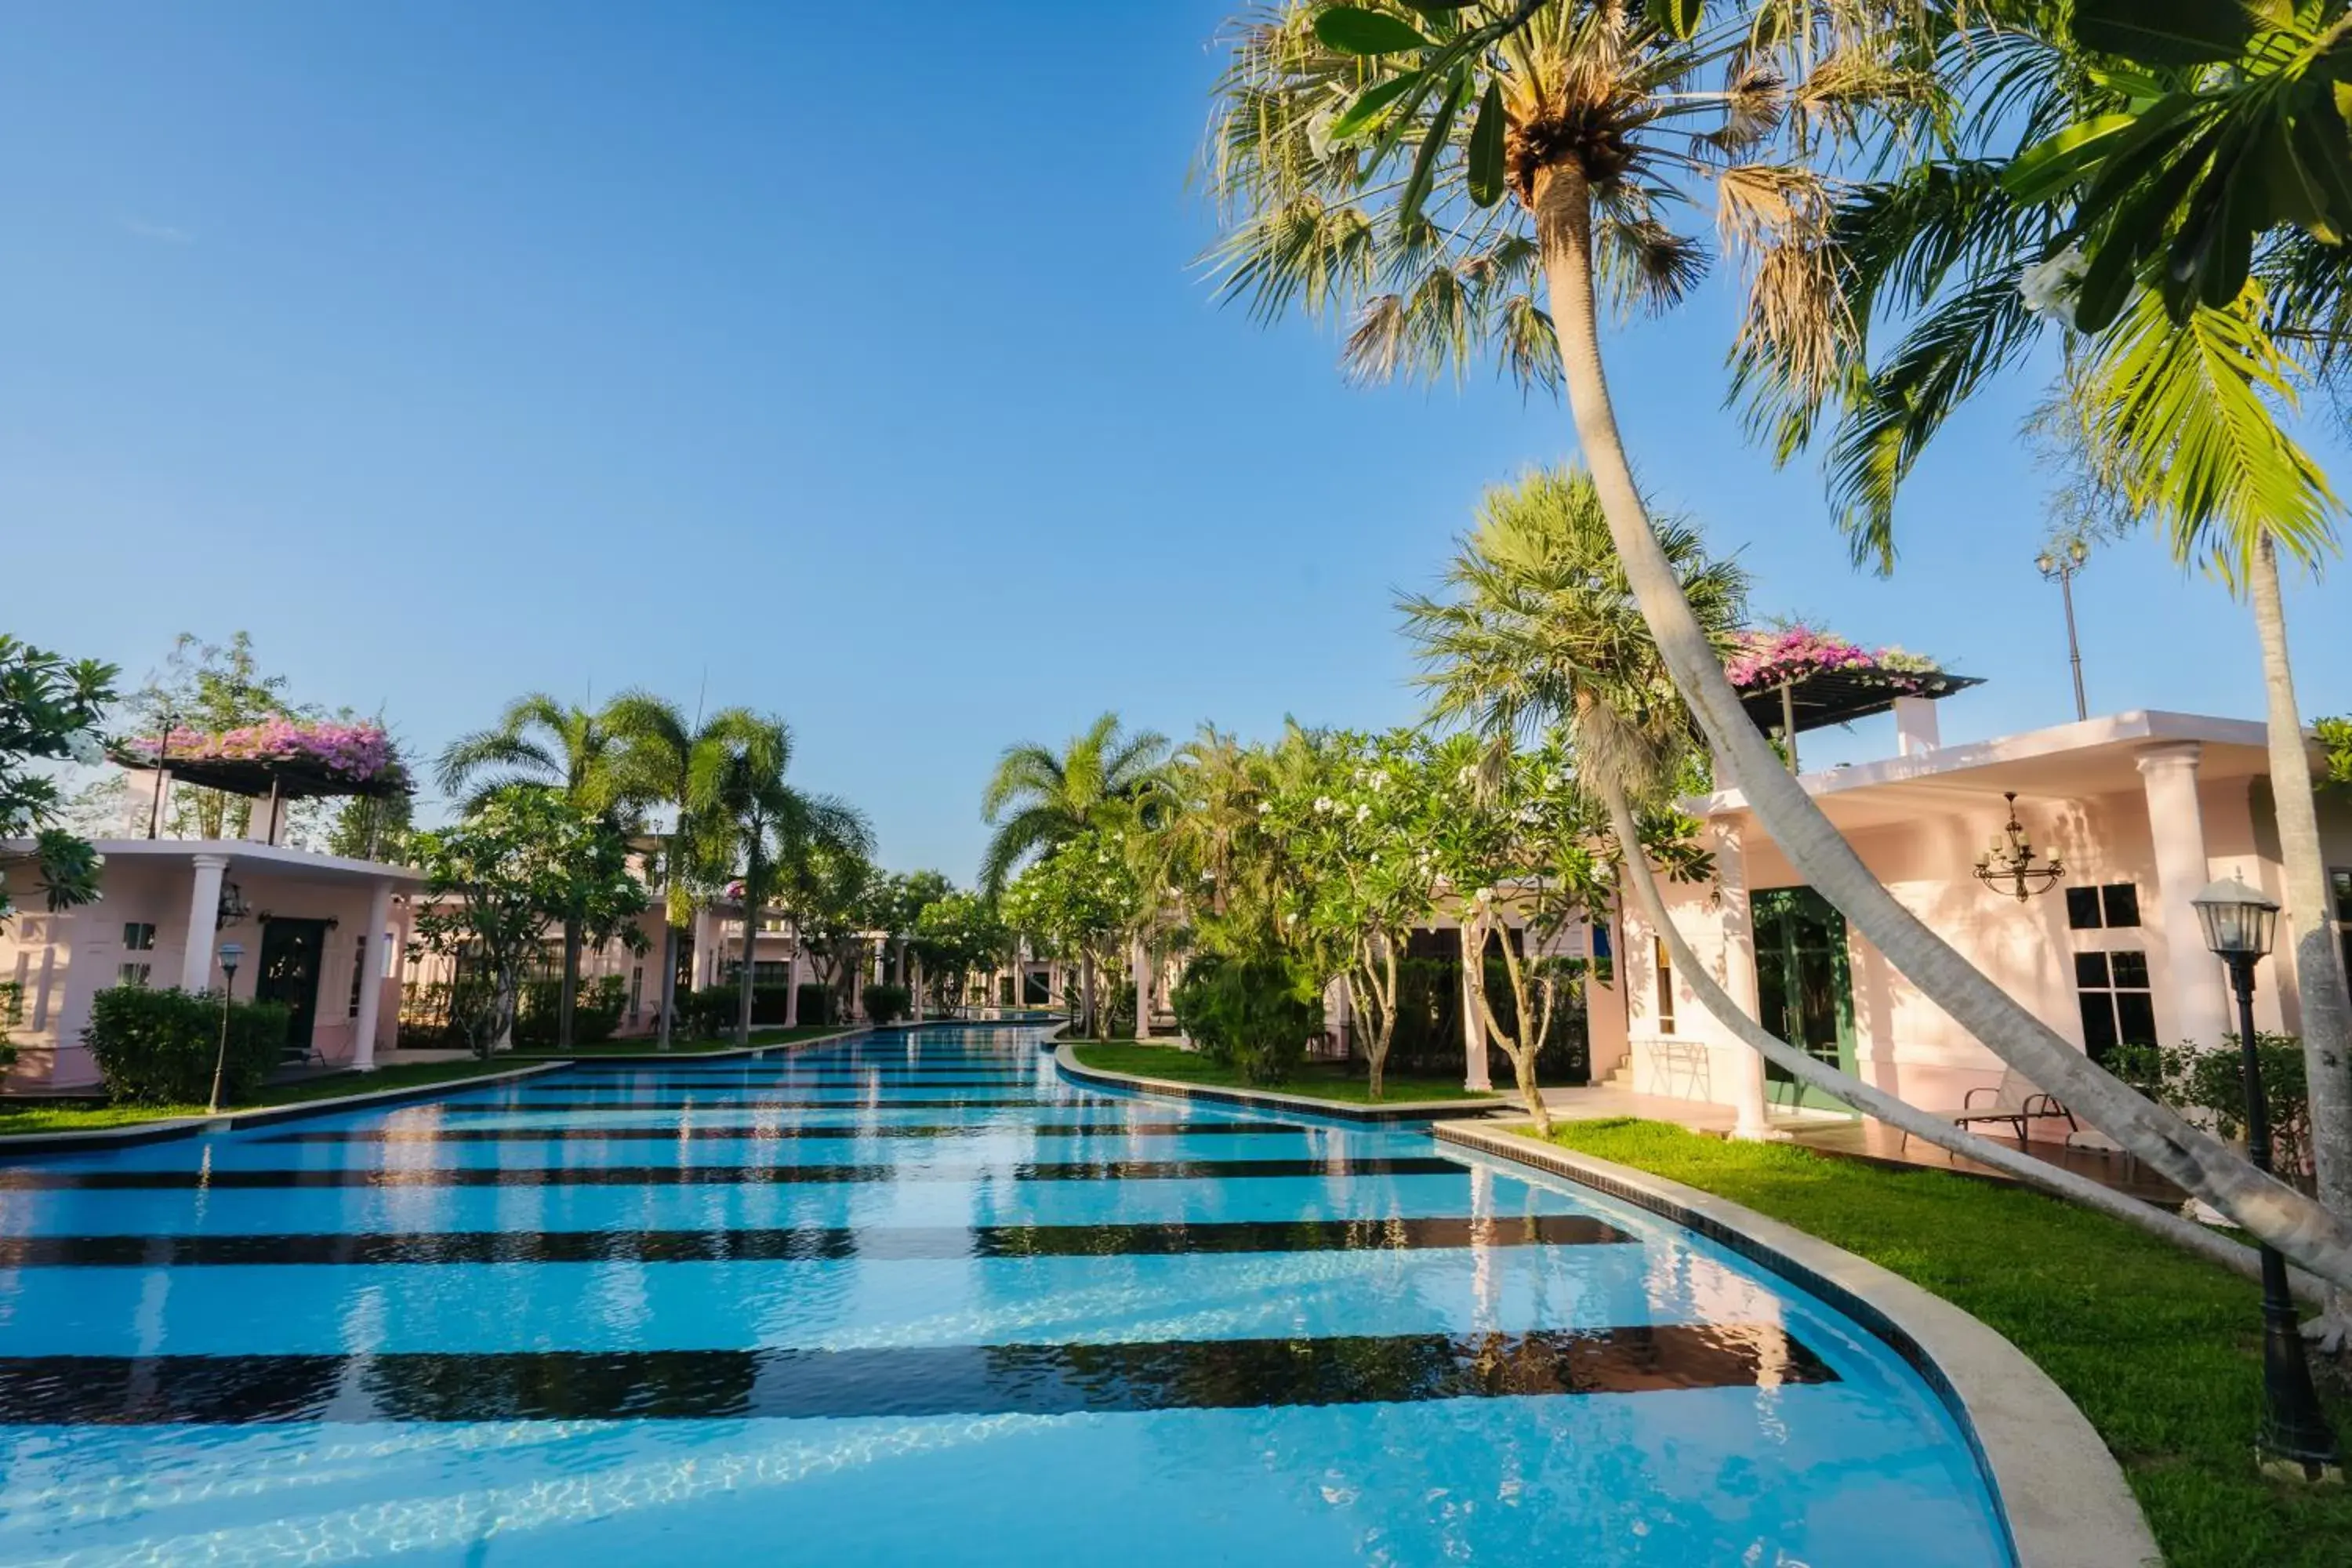 Property building, Swimming Pool in The Sea-Cret Garden Hua-Hin Hotel